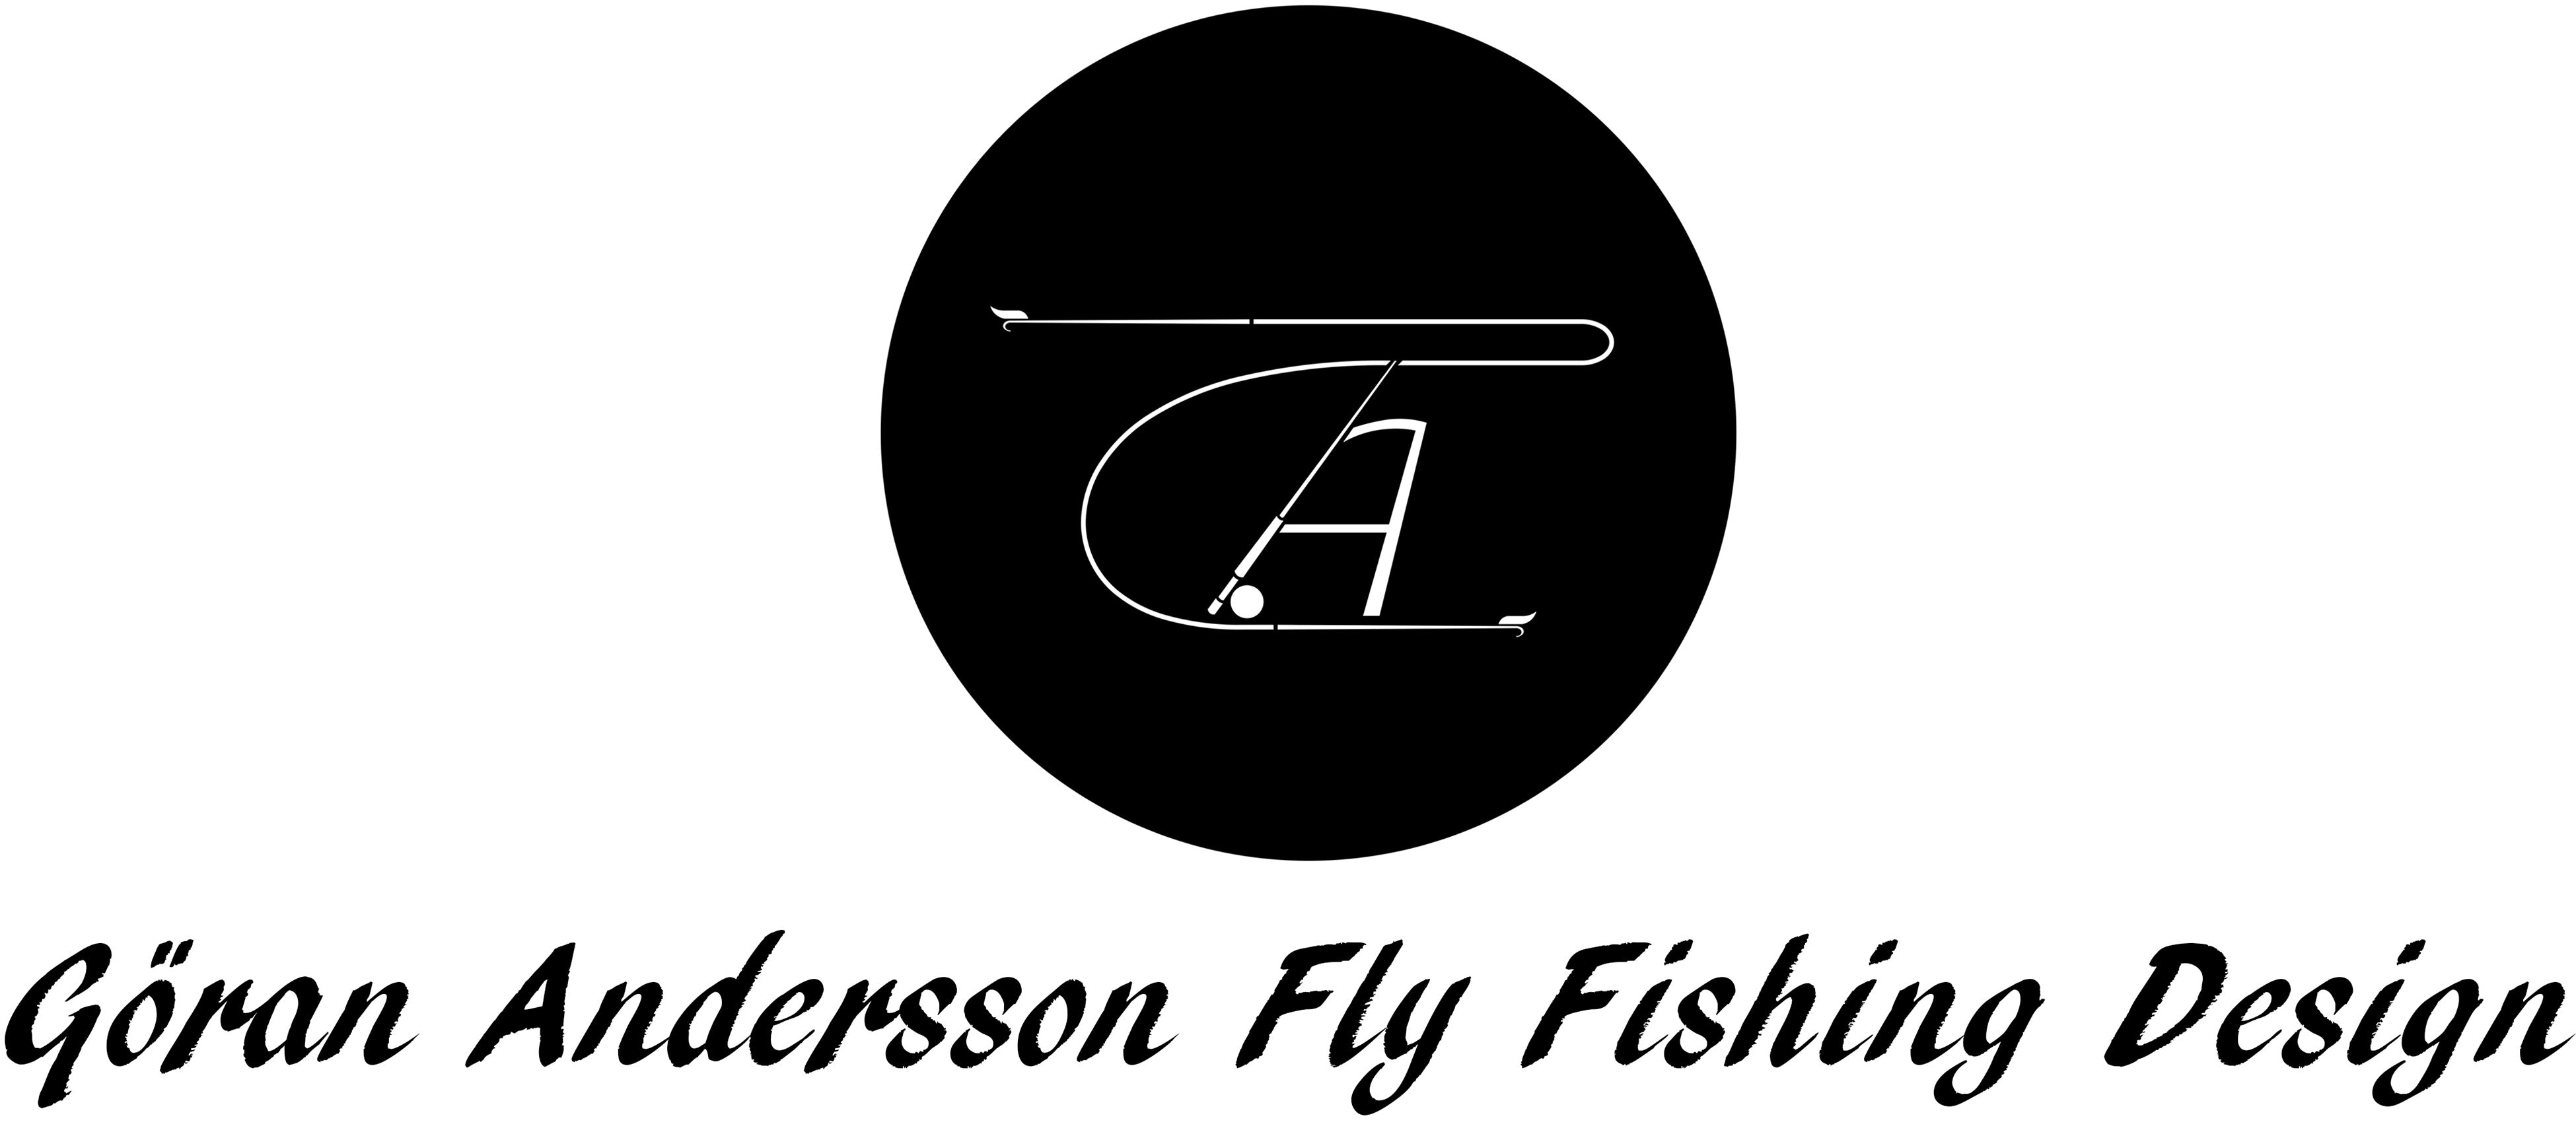 Göran Andersson Fly Fishing Design